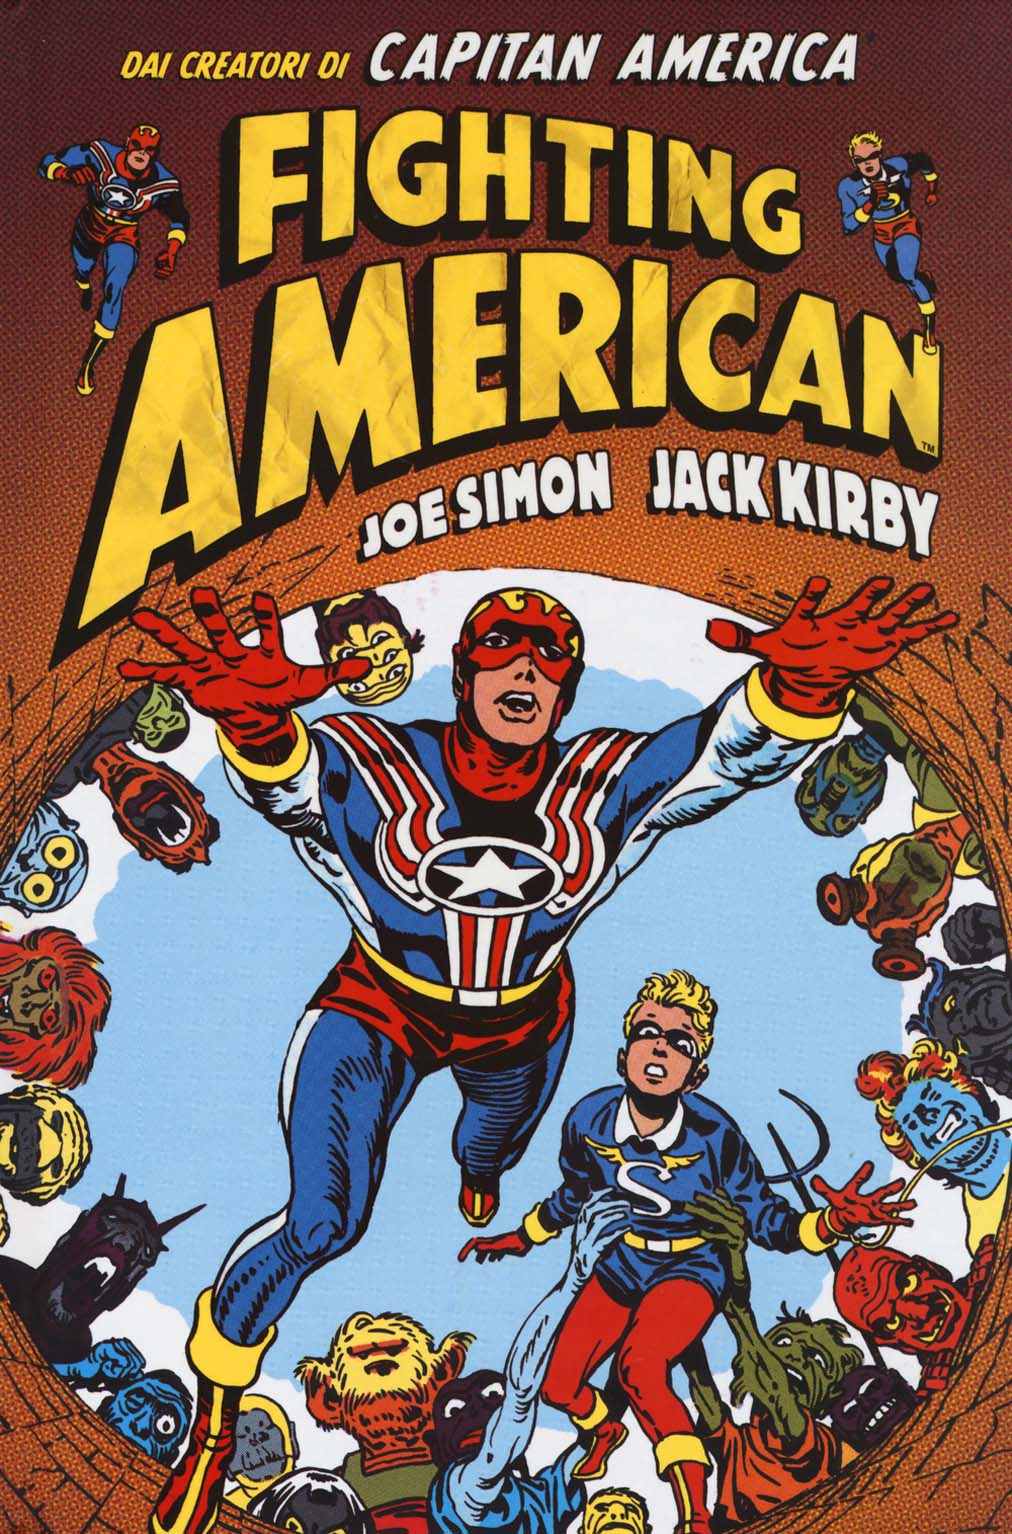 Simon Joe / Jack Kirby - Fighting American